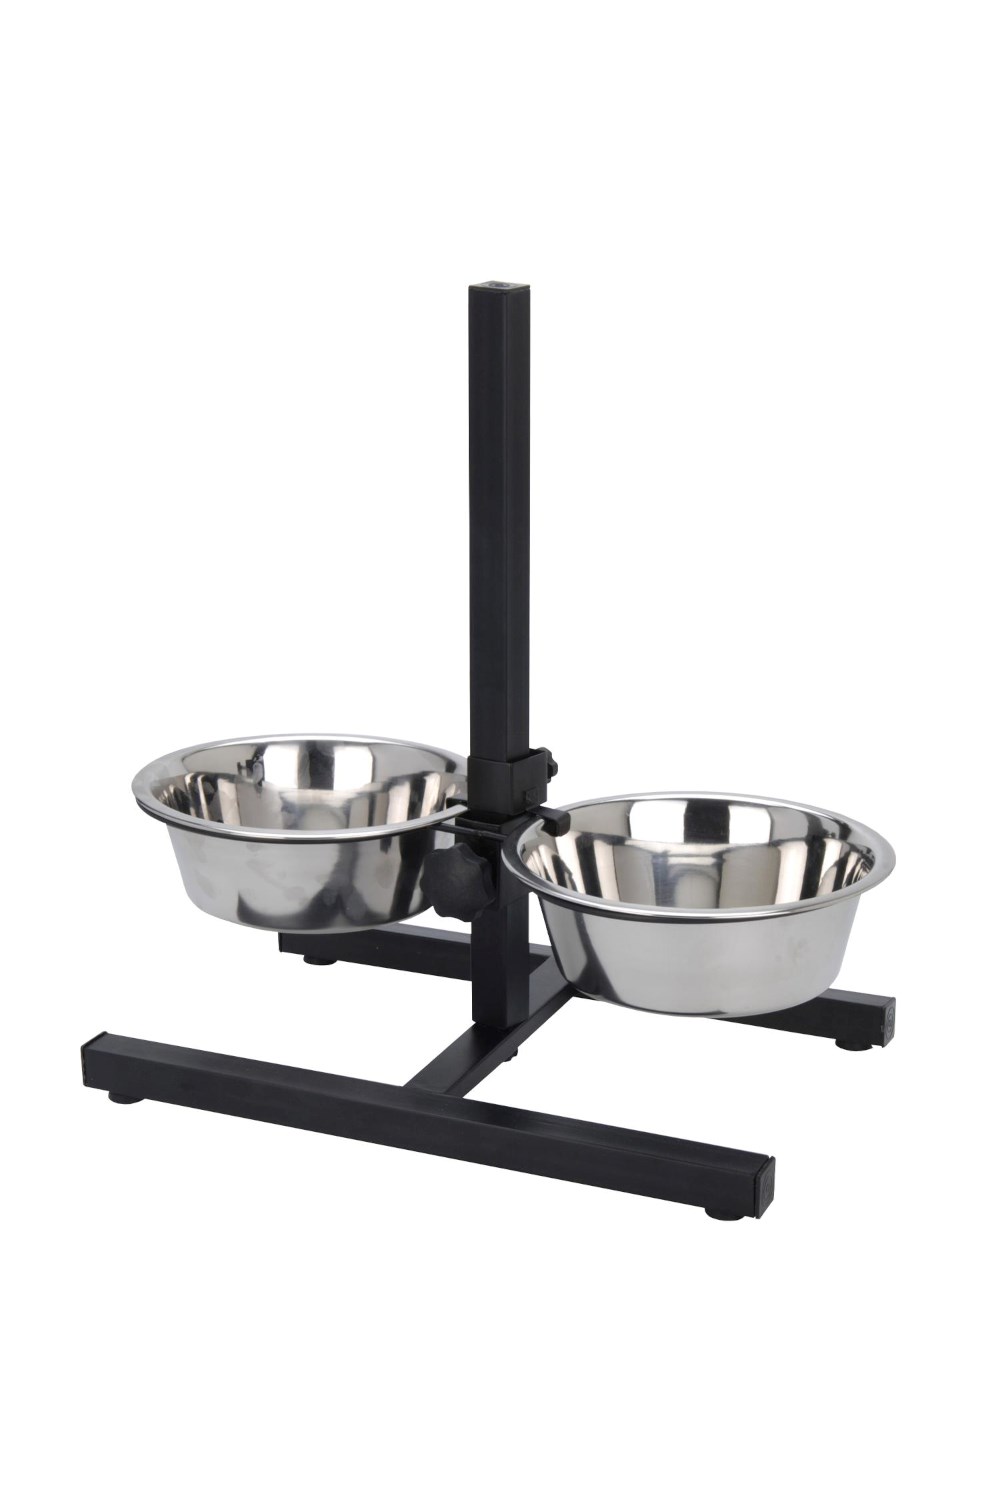 2 Adjustable Large Raised SS Dog Bowls -